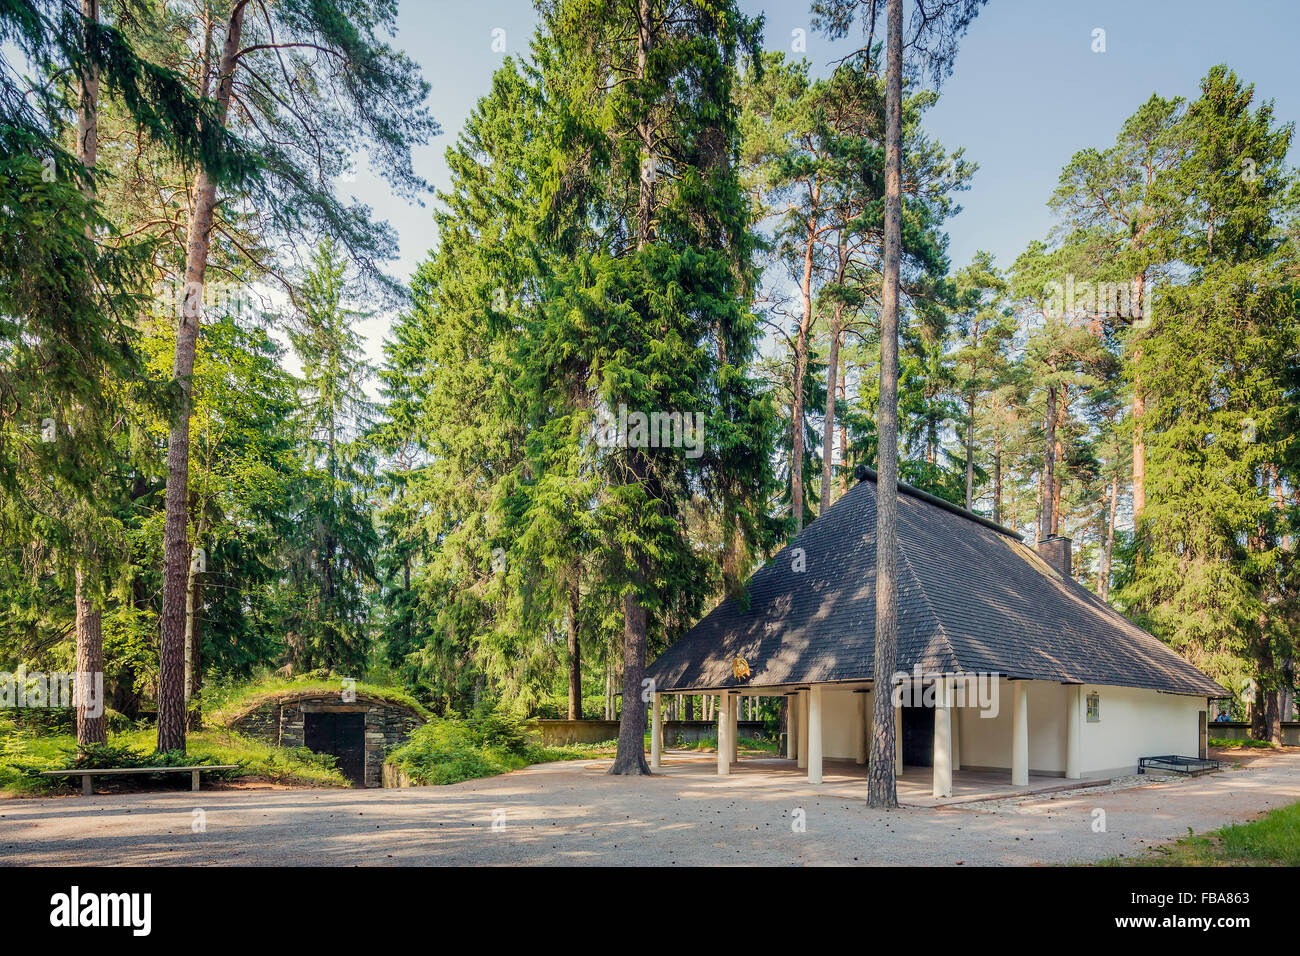 Sweden, Sodermanland, Stockholm, Gamla Enskede, Skogskyrkogarden, House among green trees under clear sky Stock Photo